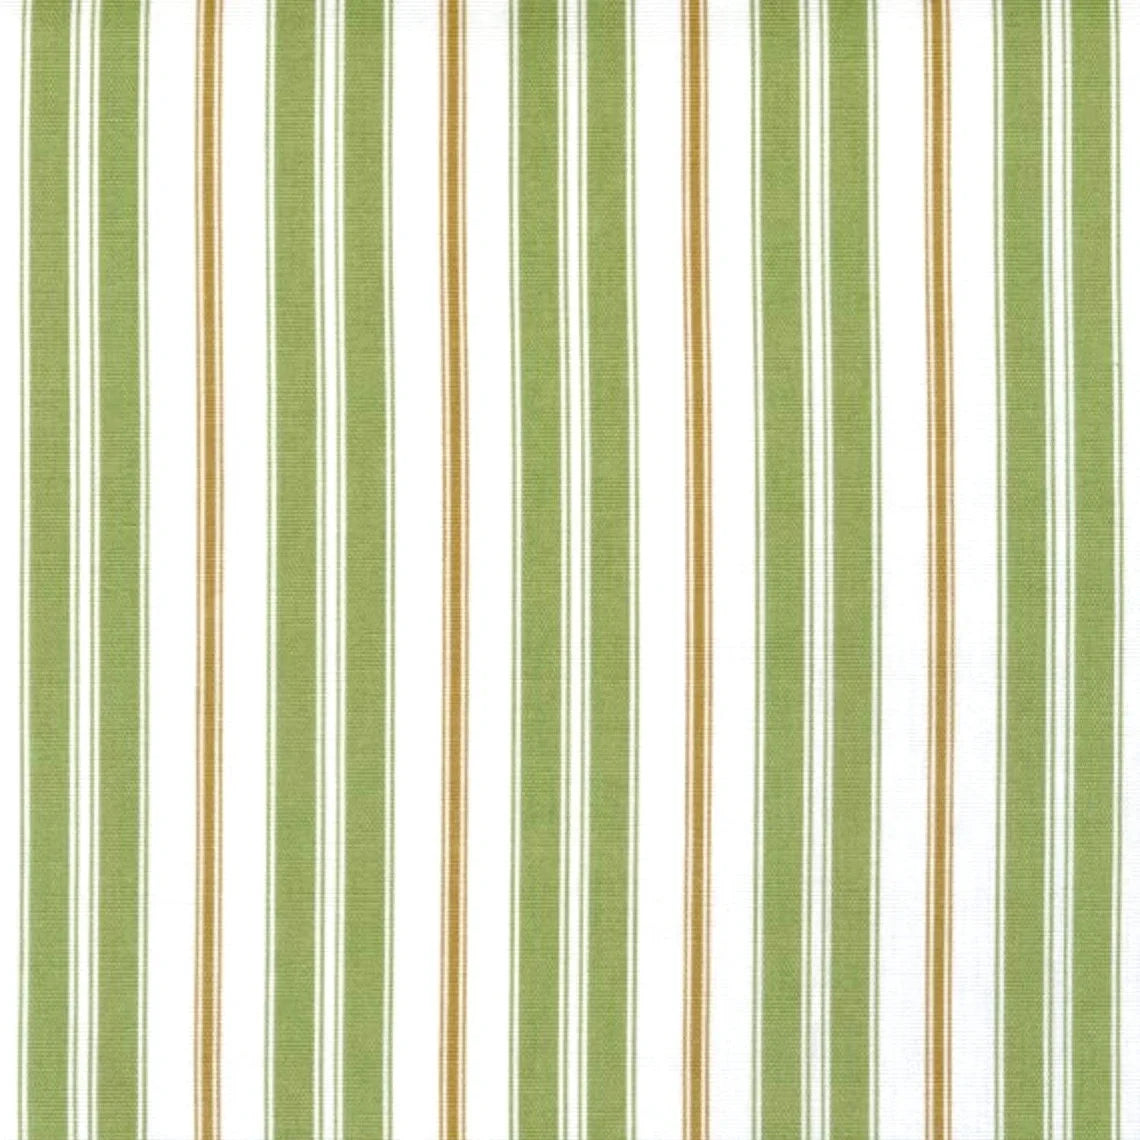 round tablecloth in newbury aloe green stripe- green, brown, white